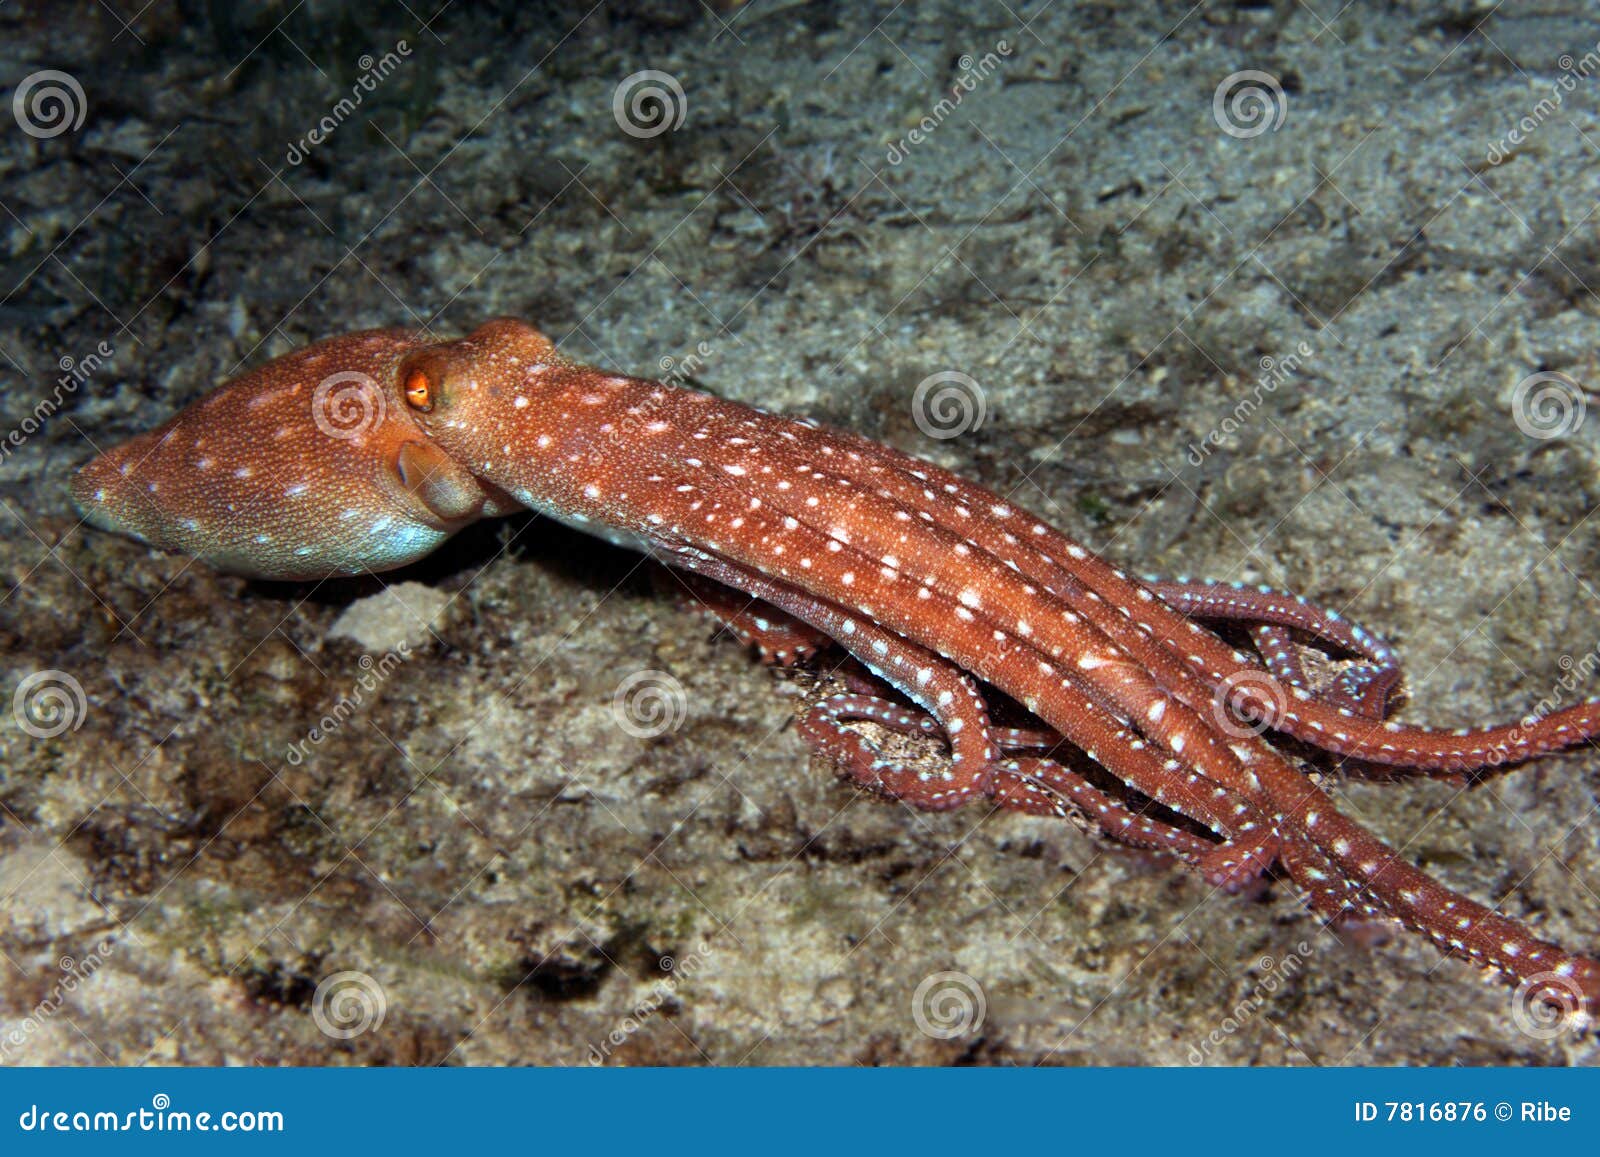 octopus macropus